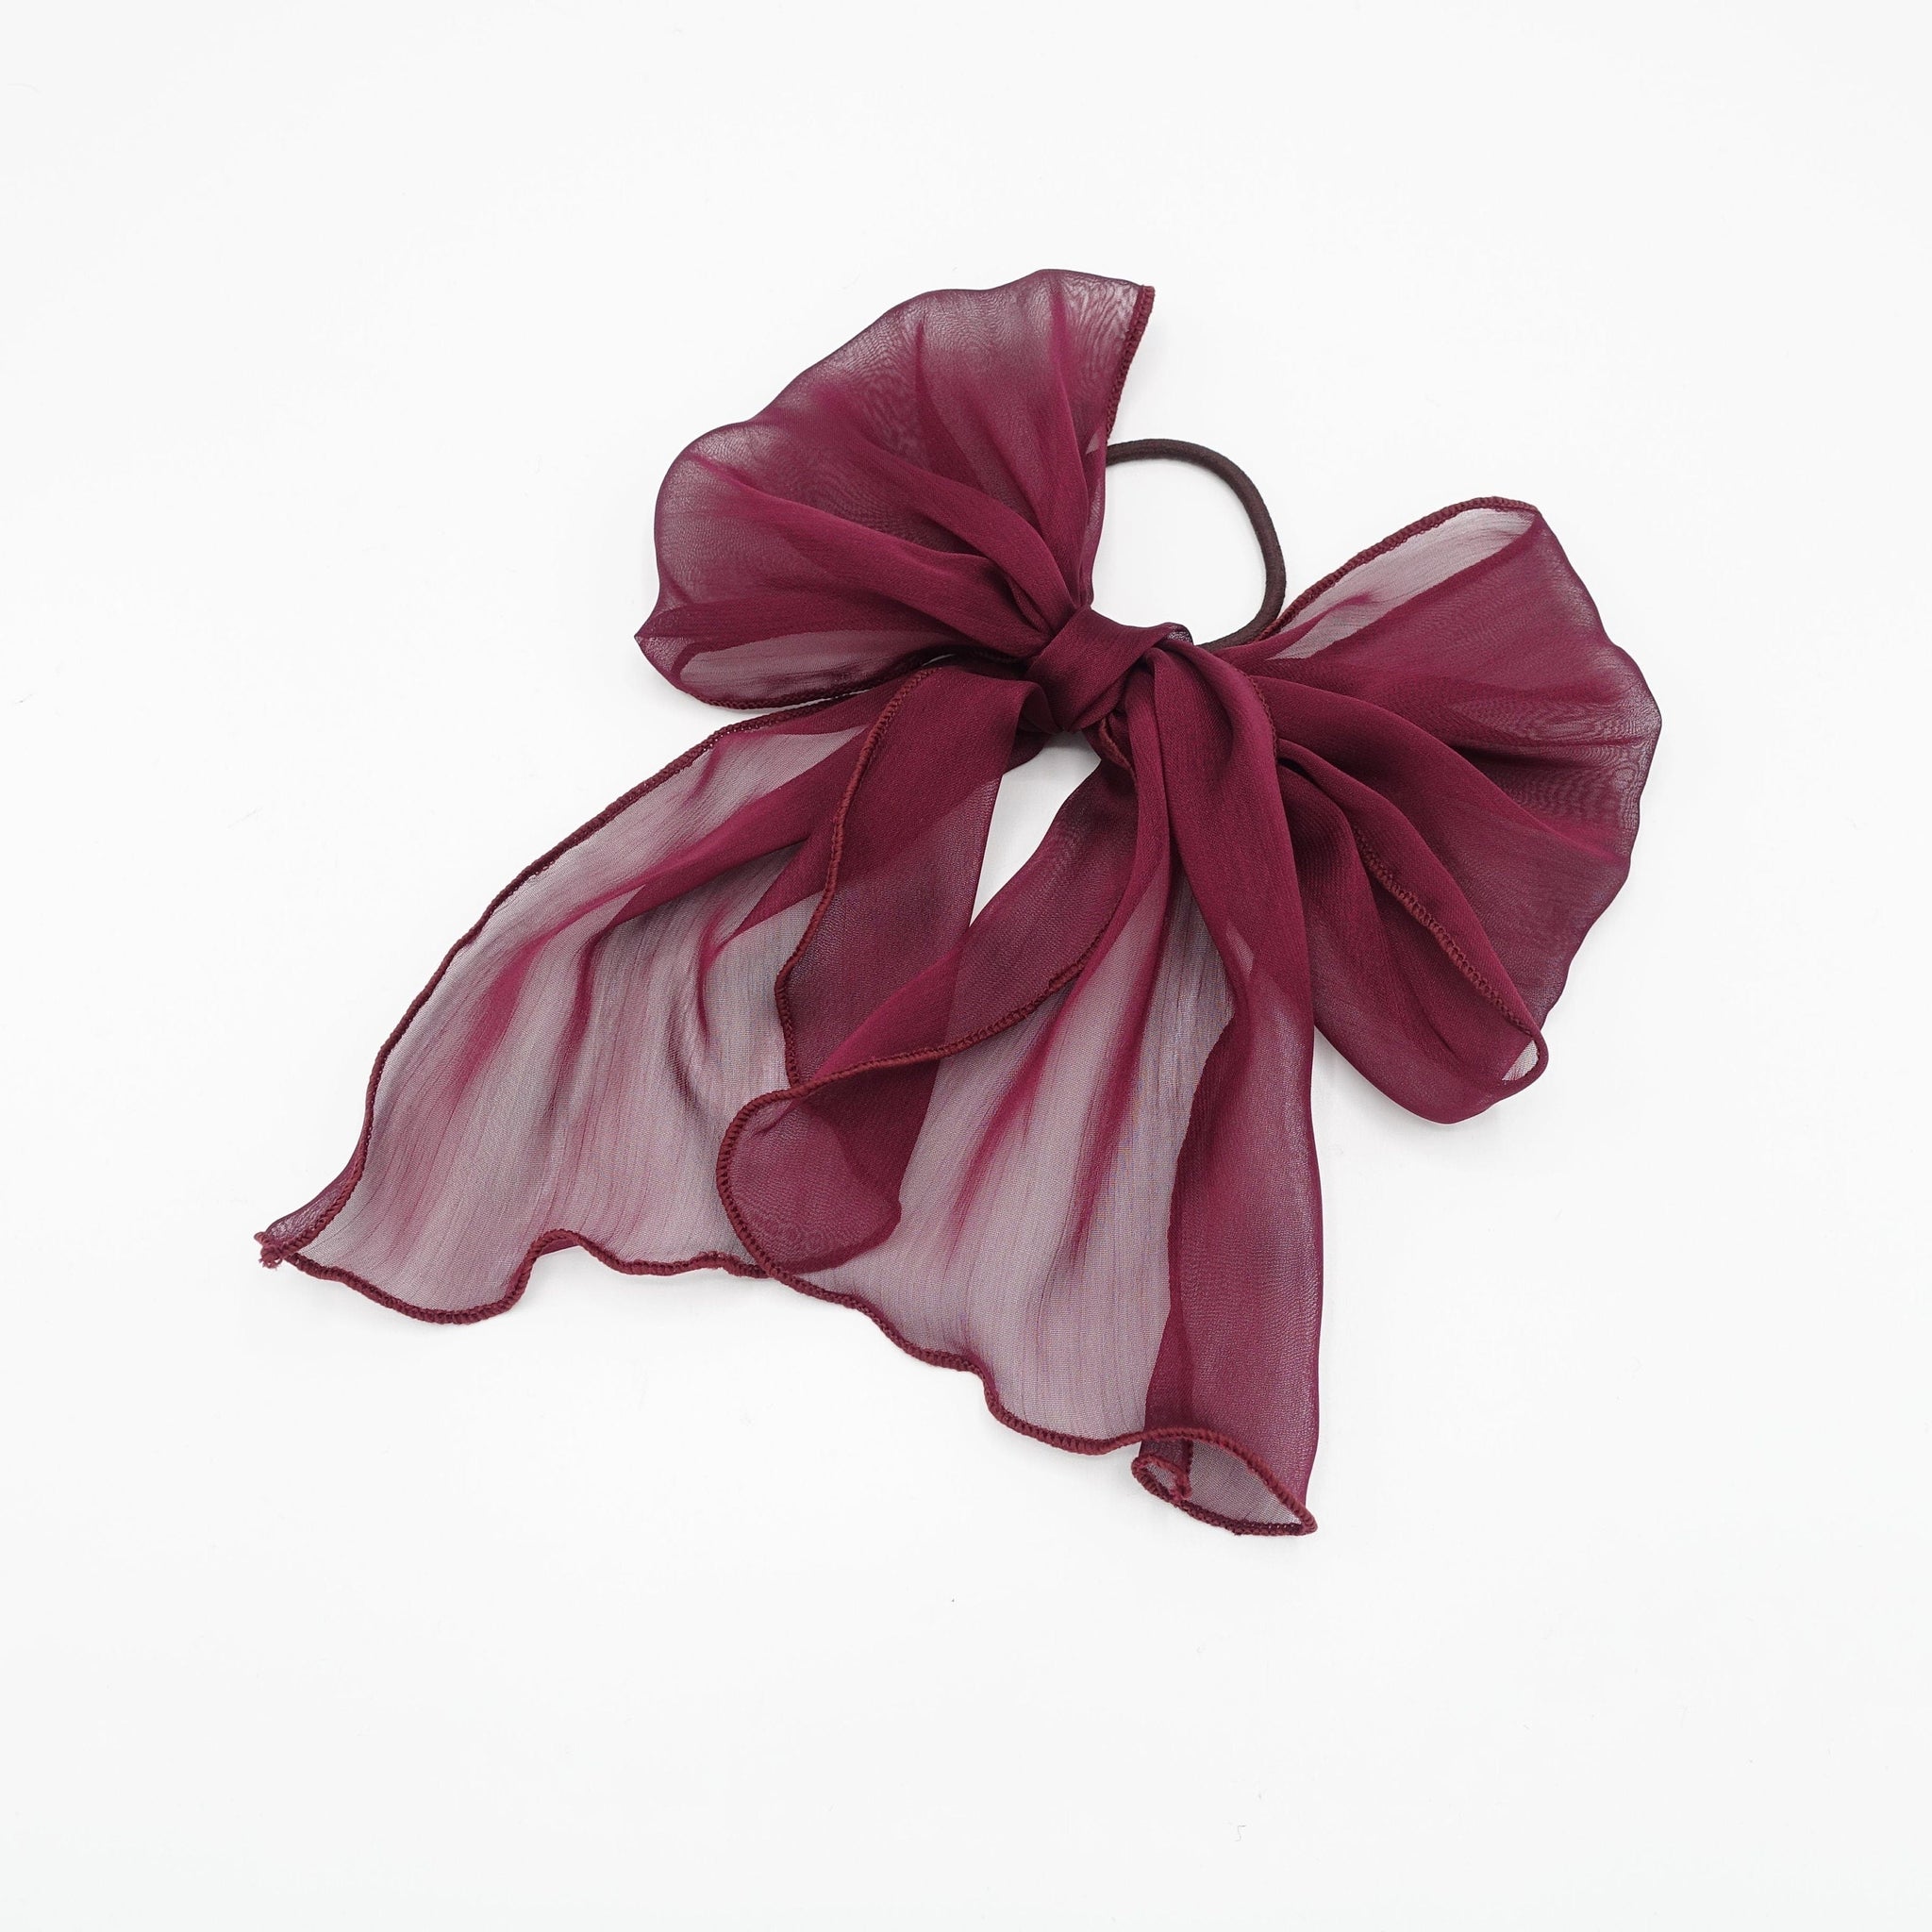 veryshine.com Ponytail holders Red wine silky chiffon bow knot hair elastic women ponytail holder hair tie